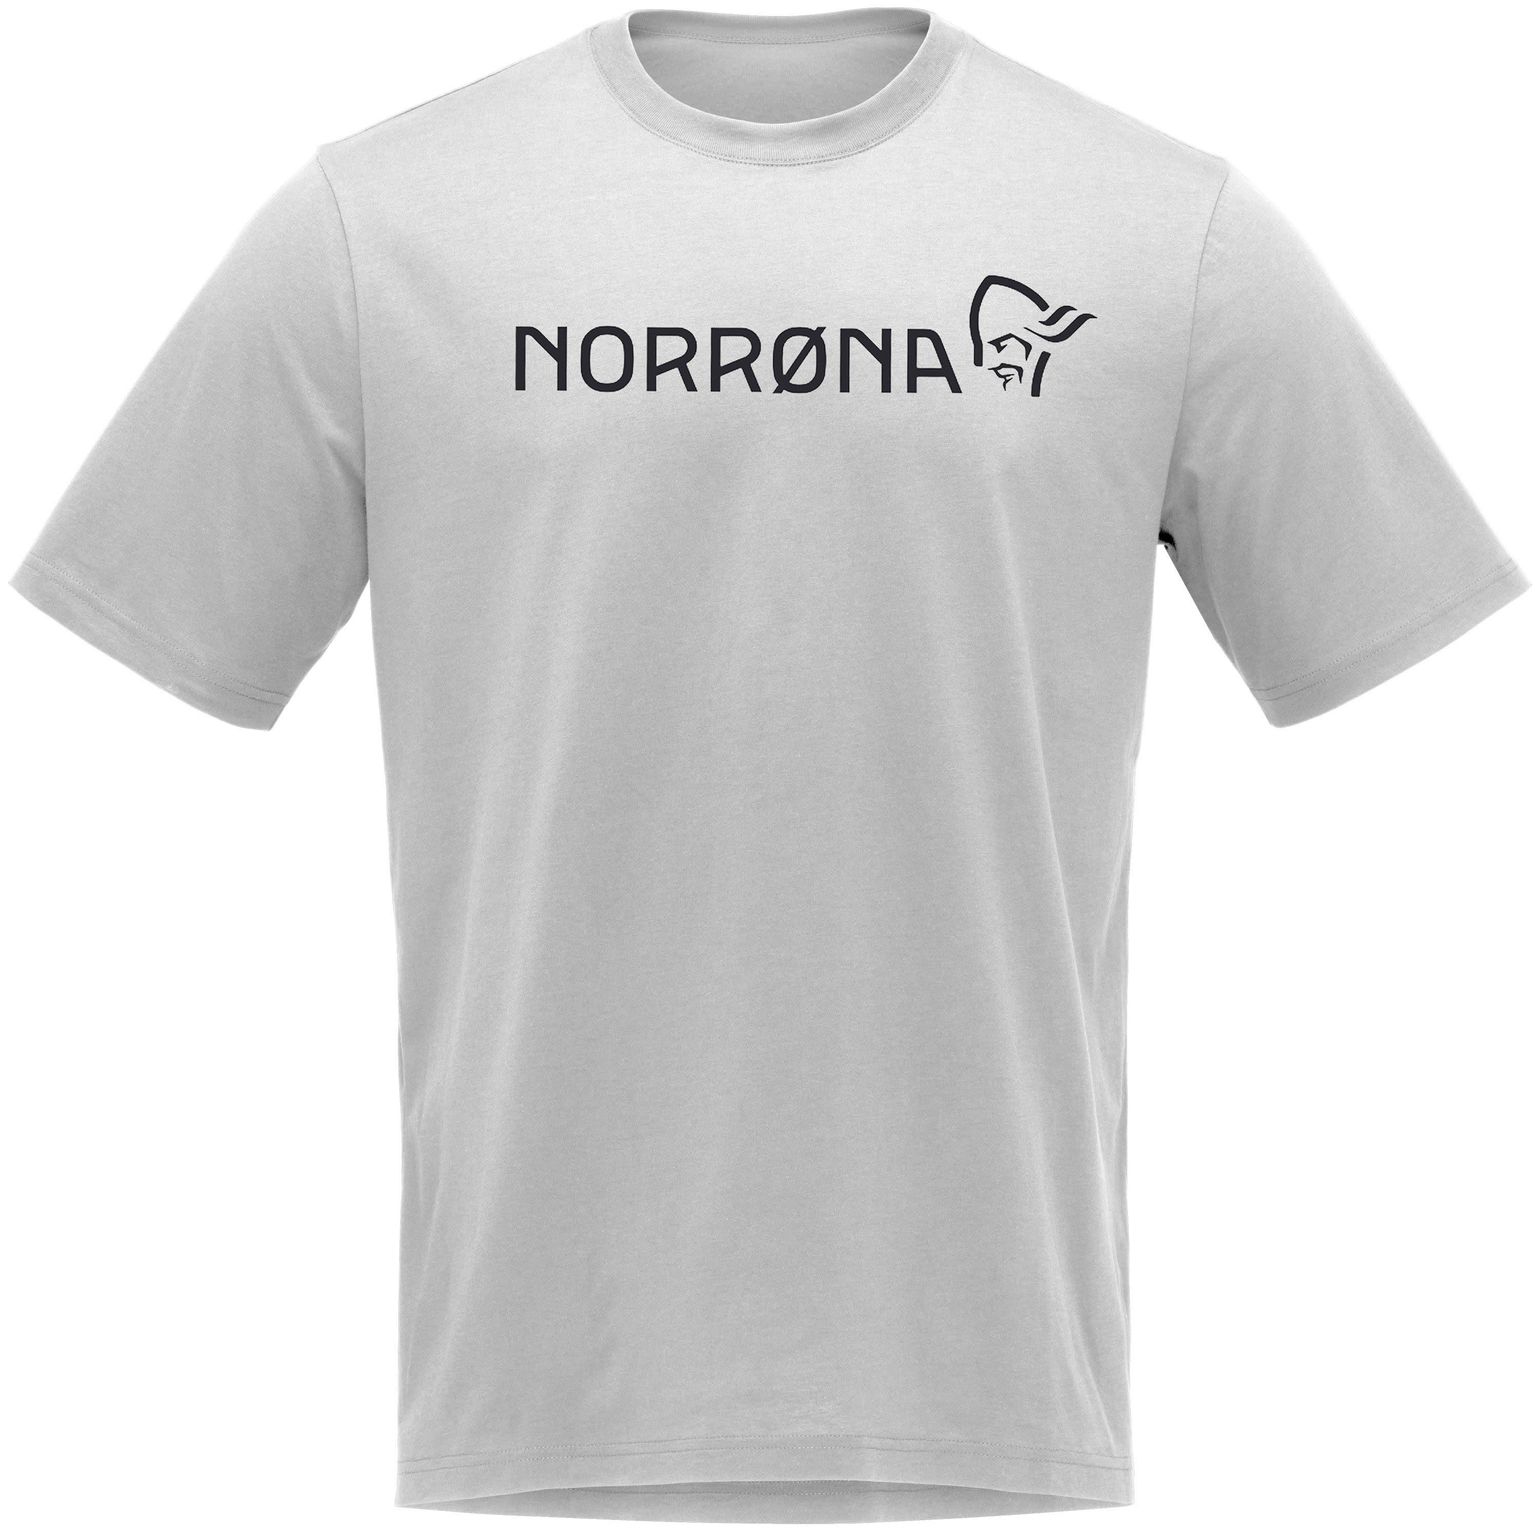 Norrøna Men's /29 Cotton Norrøna Viking T-Shirt Drizzle Melange